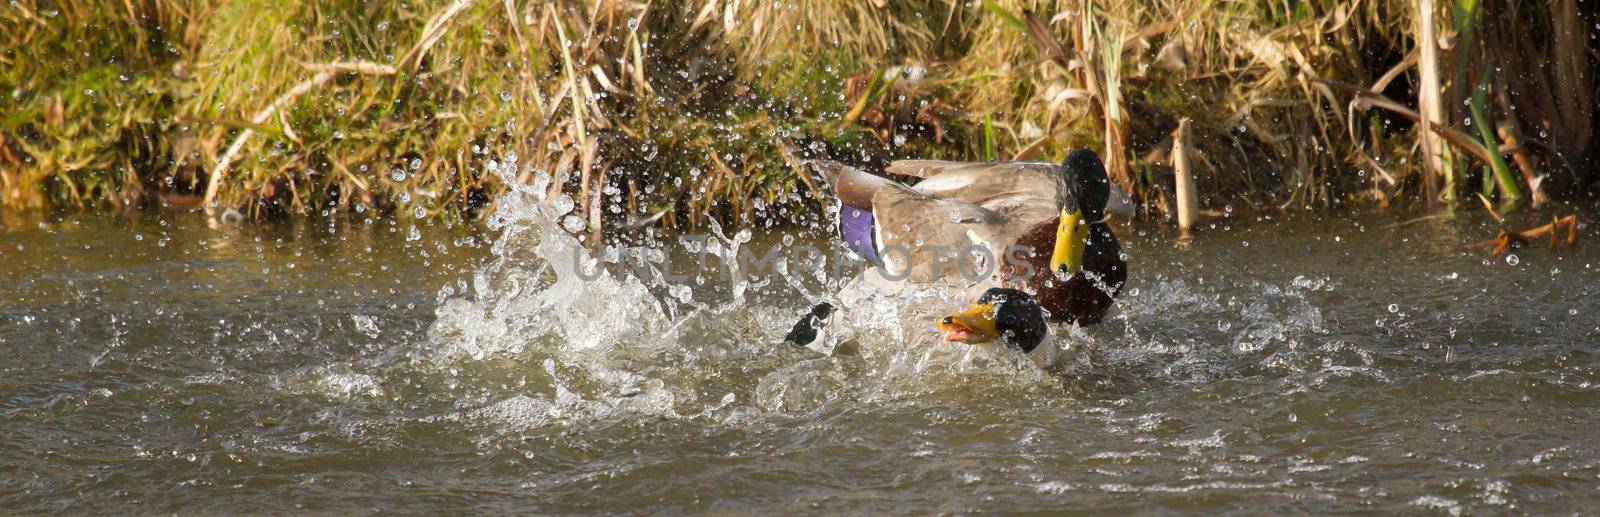 Fight between two wild ducks on water